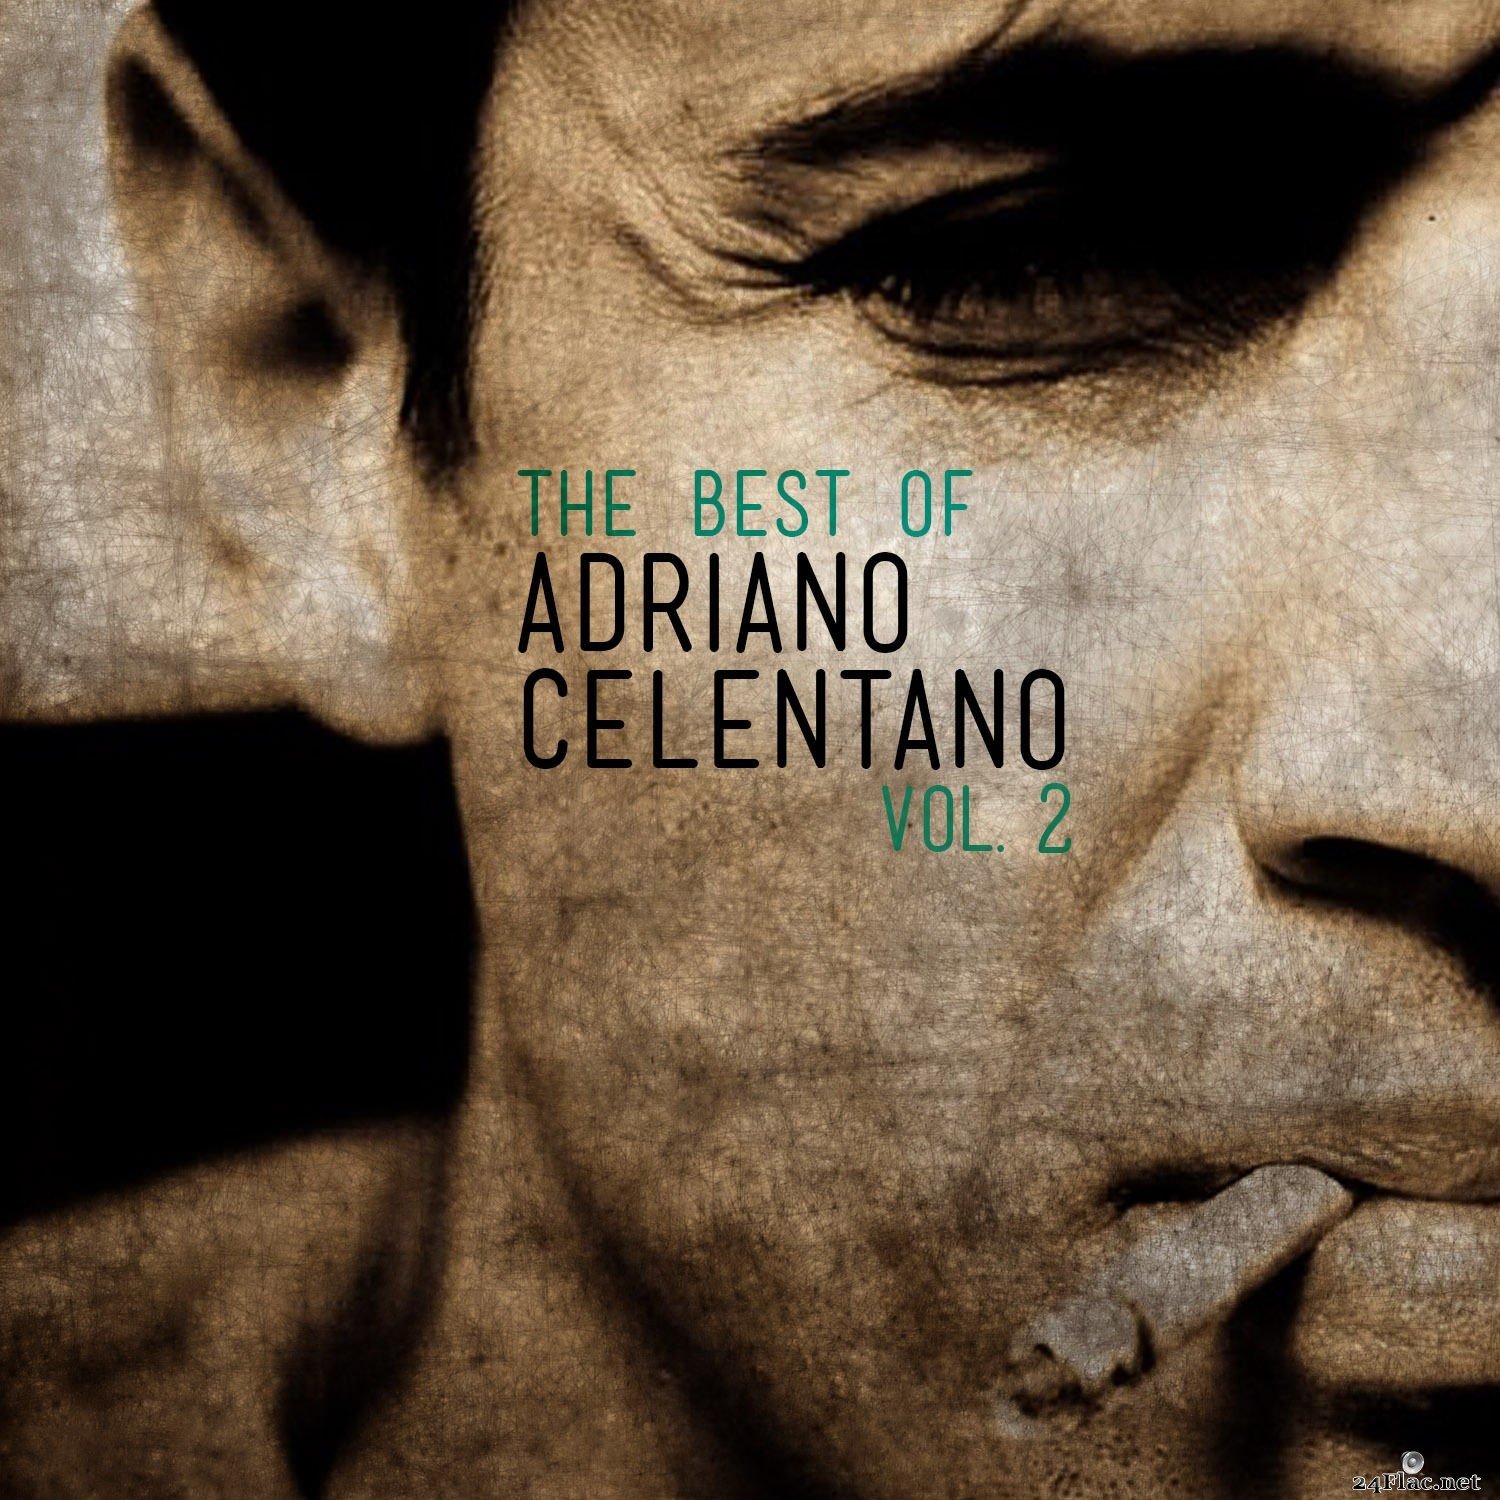 Adriano Celentano - The Best of Adriano Celentano, Vol. 2 (2012) FLAC